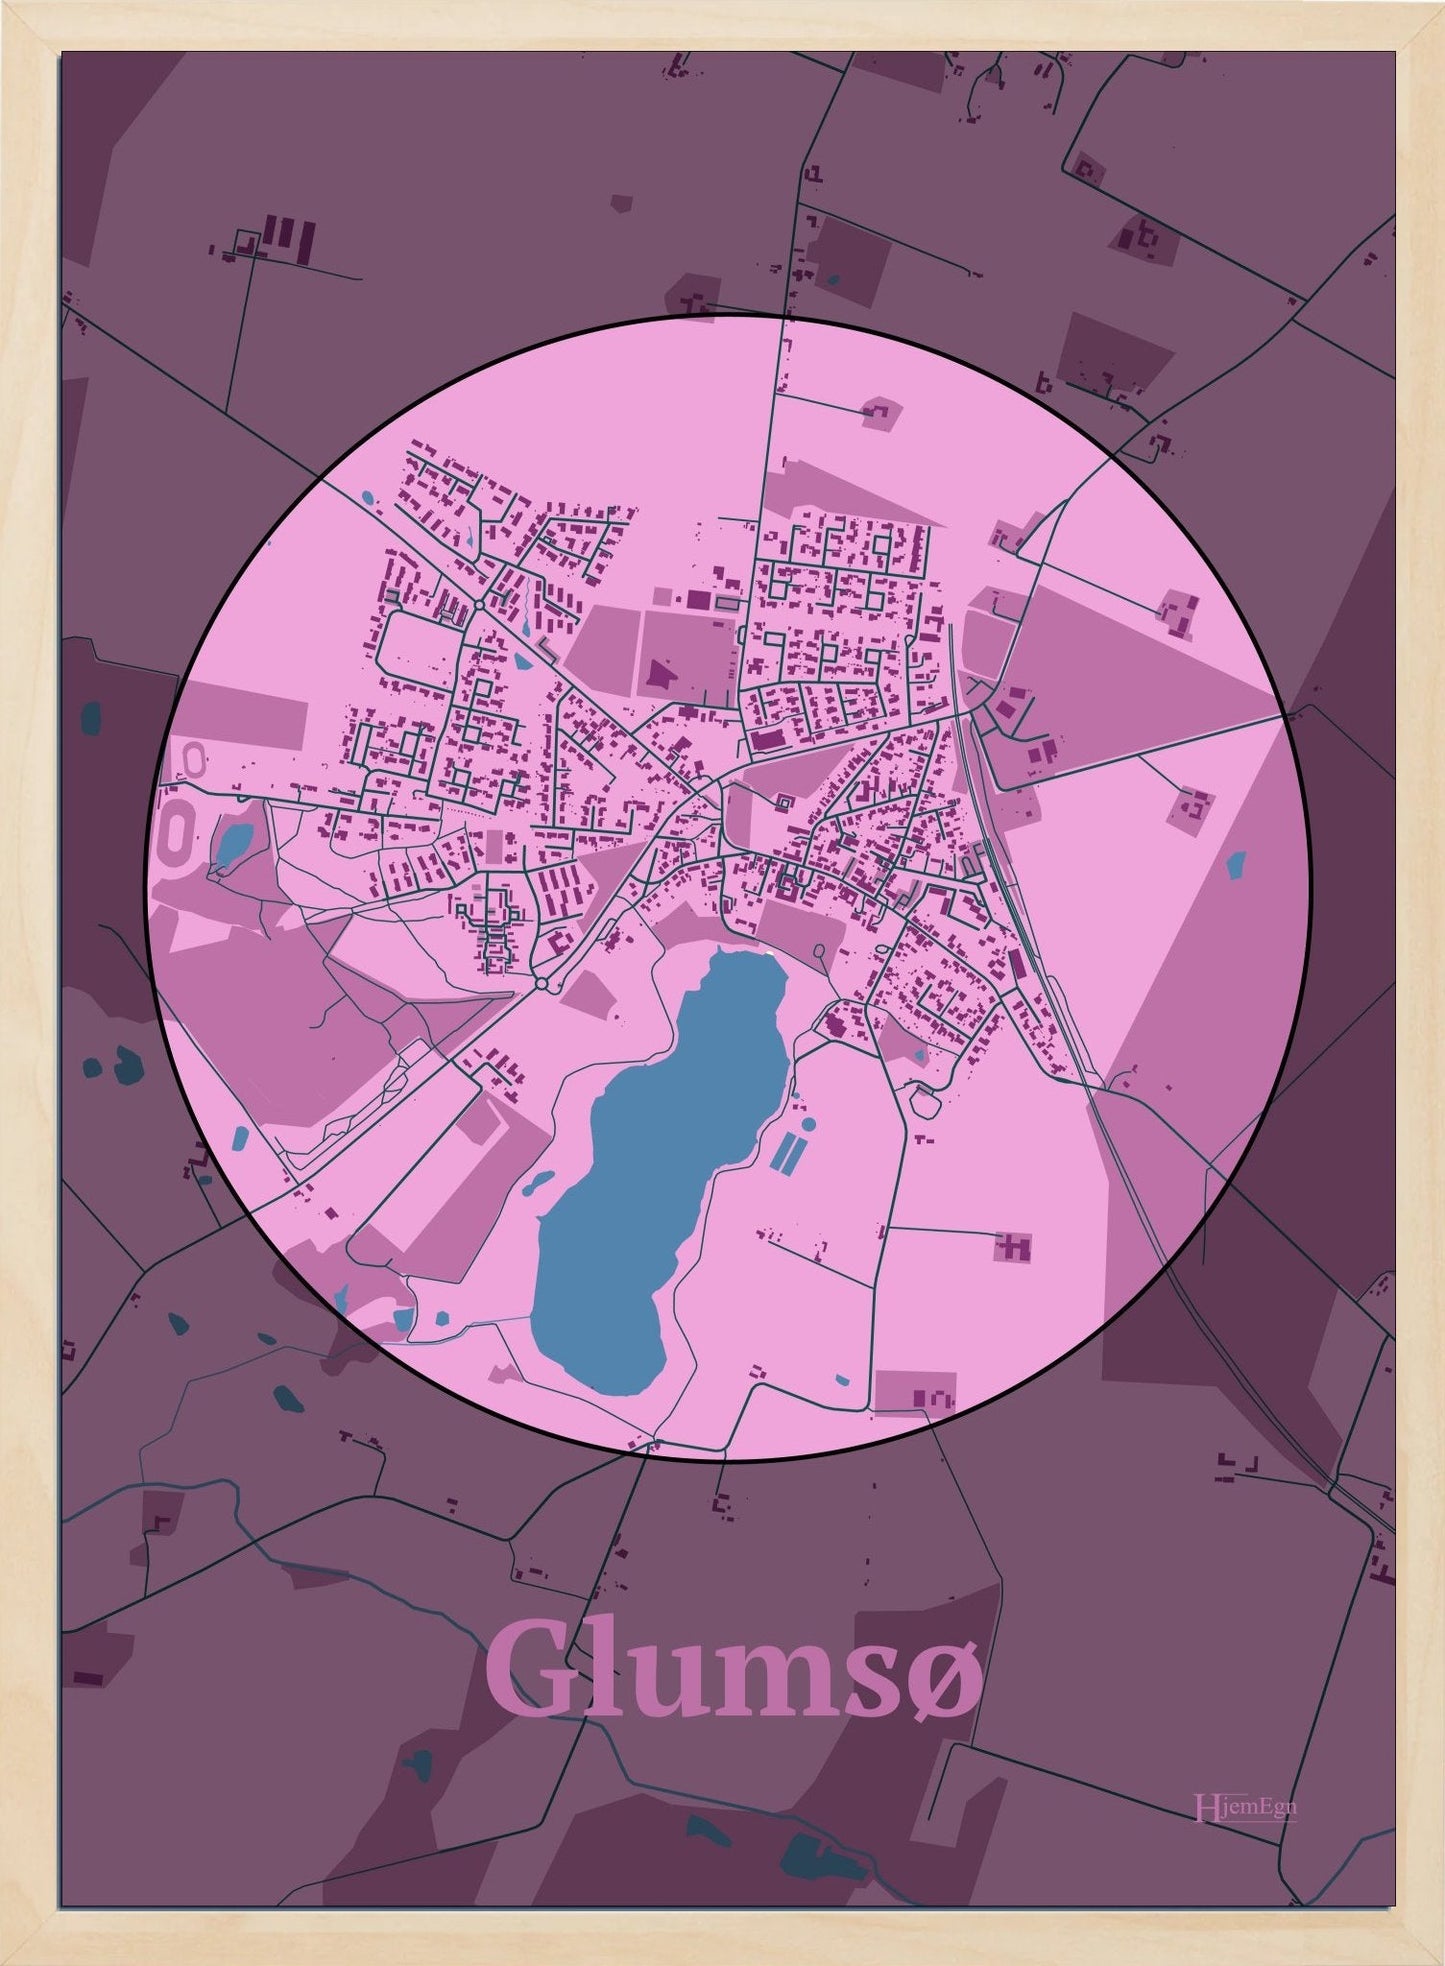 Glumsø plakat i farve pastel rød og HjemEgn.dk design centrum. Design bykort for Glumsø